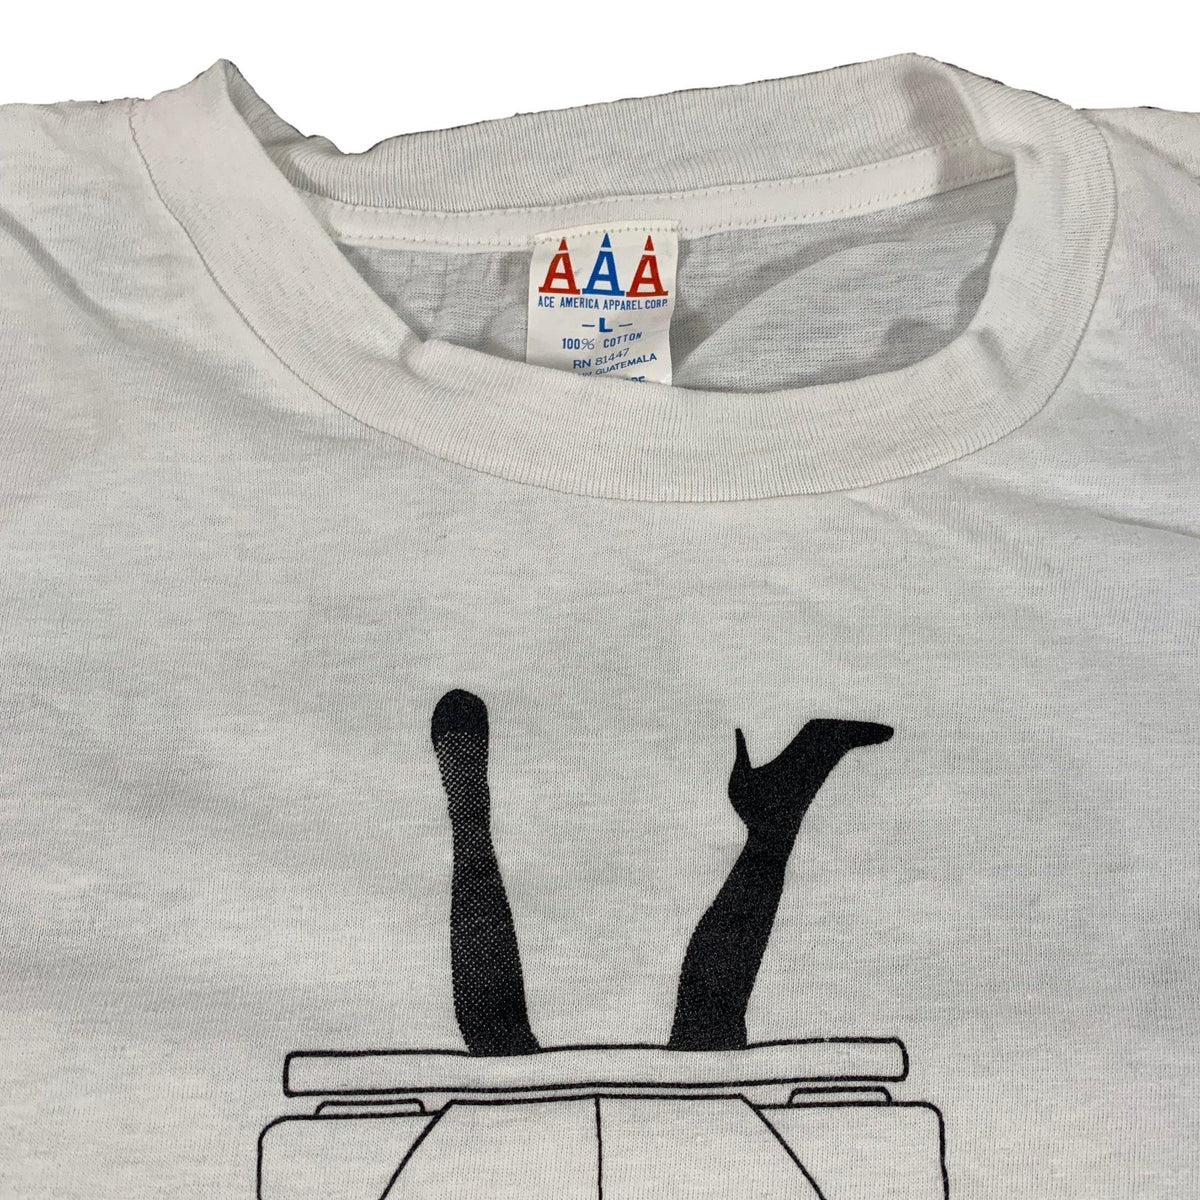 Vintage Original LL Cool J Back Seat T shirt tag detail